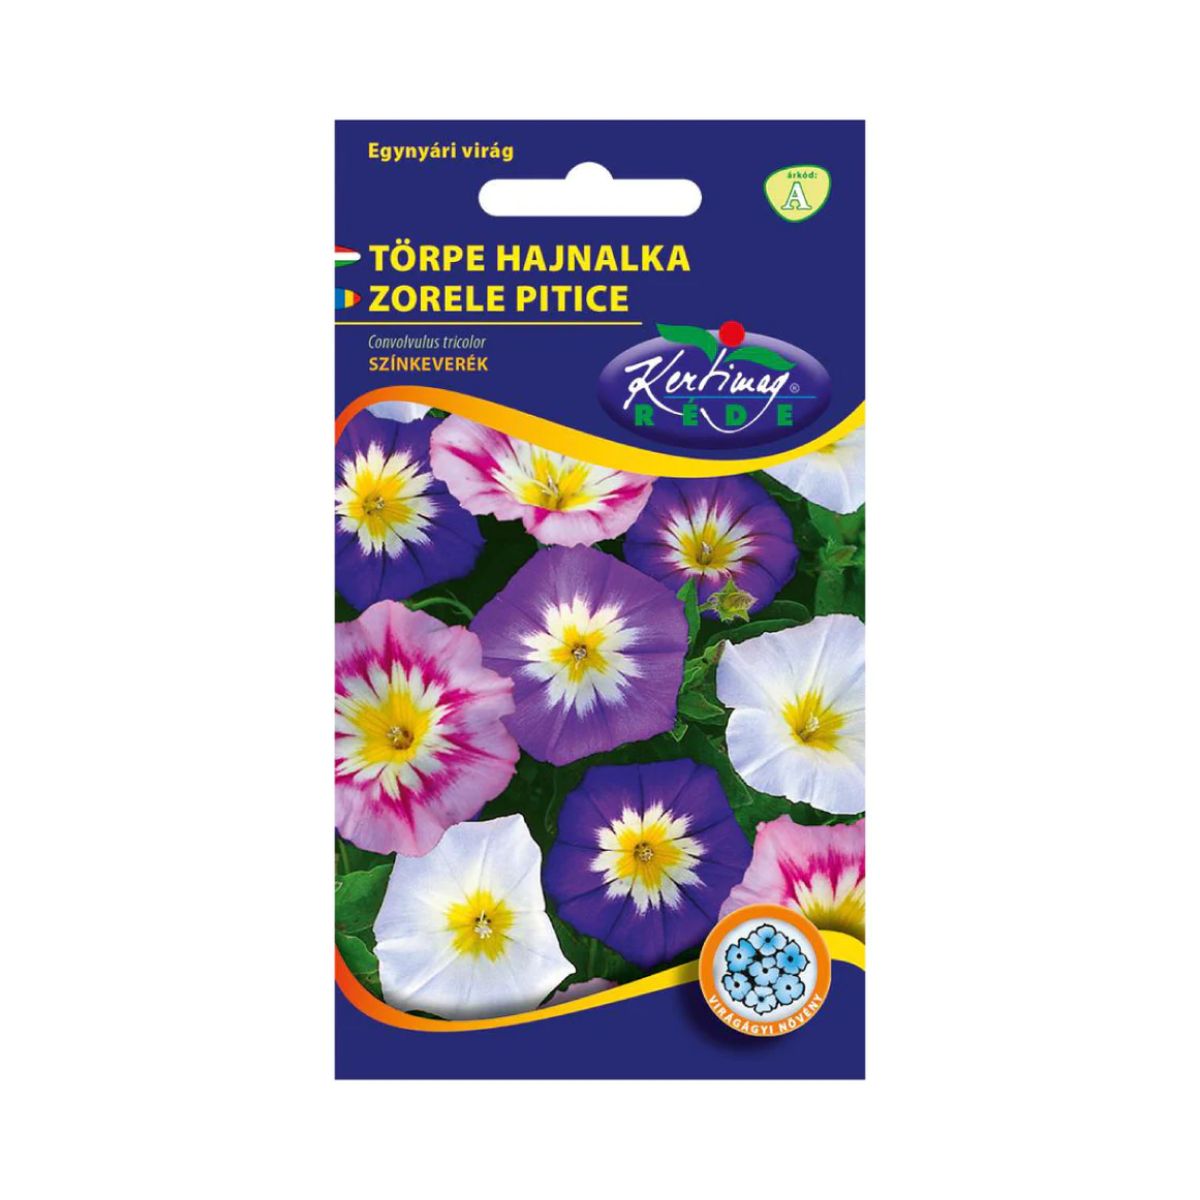 Seminte flori - Seminte de zorele pitice TRICOLOR mix, 1 gr, KERTIMAG, hectarul.ro